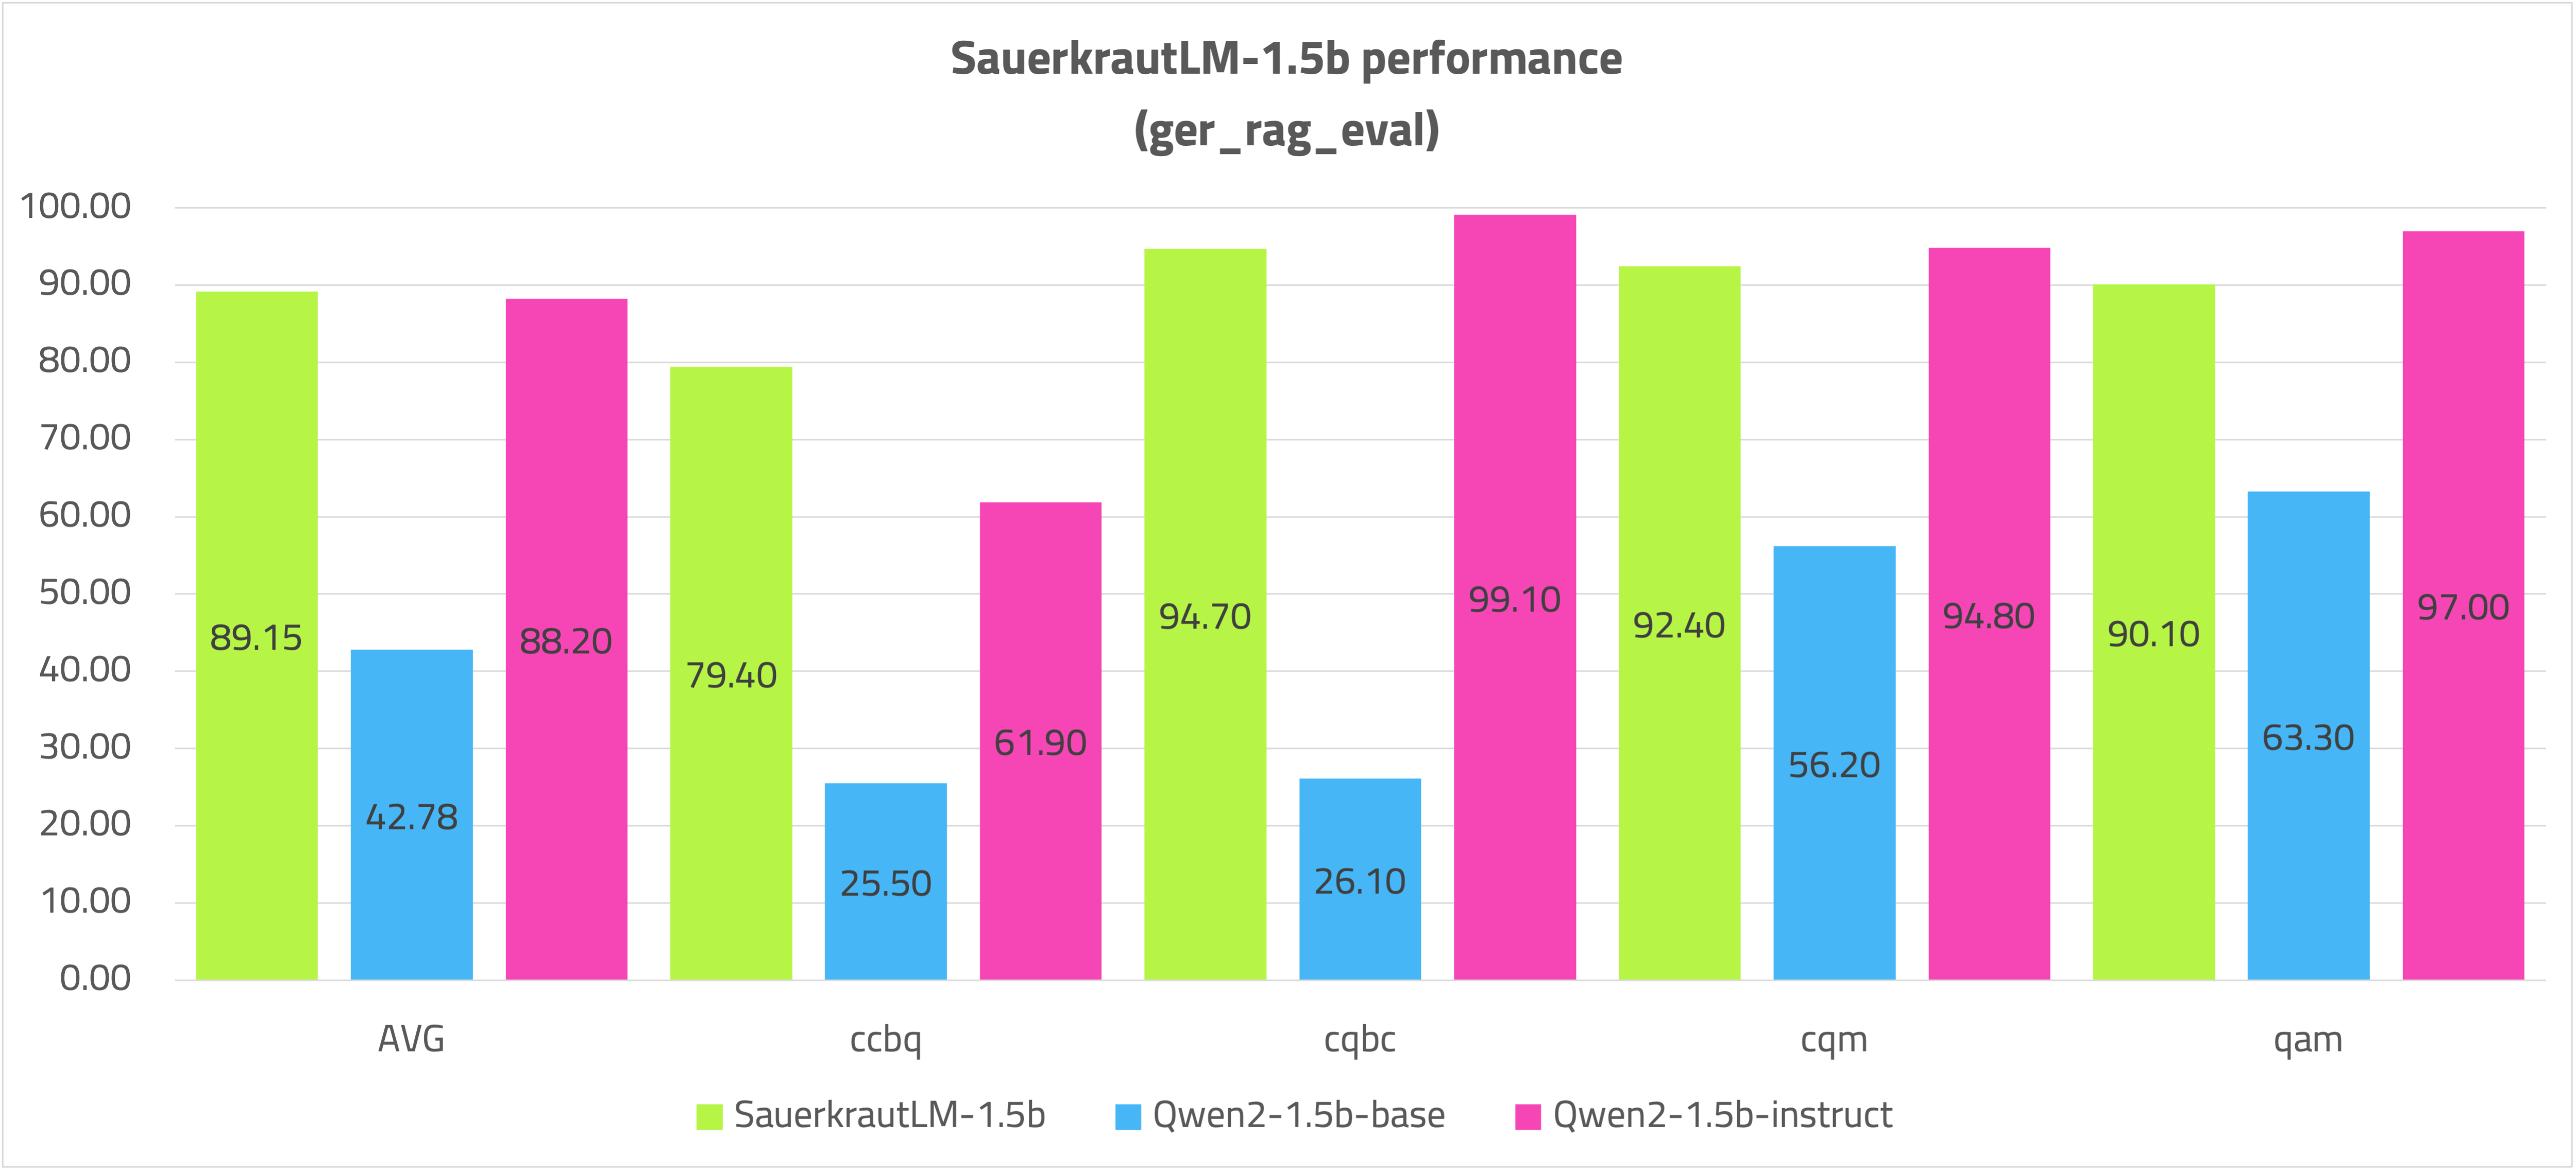 SauerkrautLM-1.5b_ger_rag